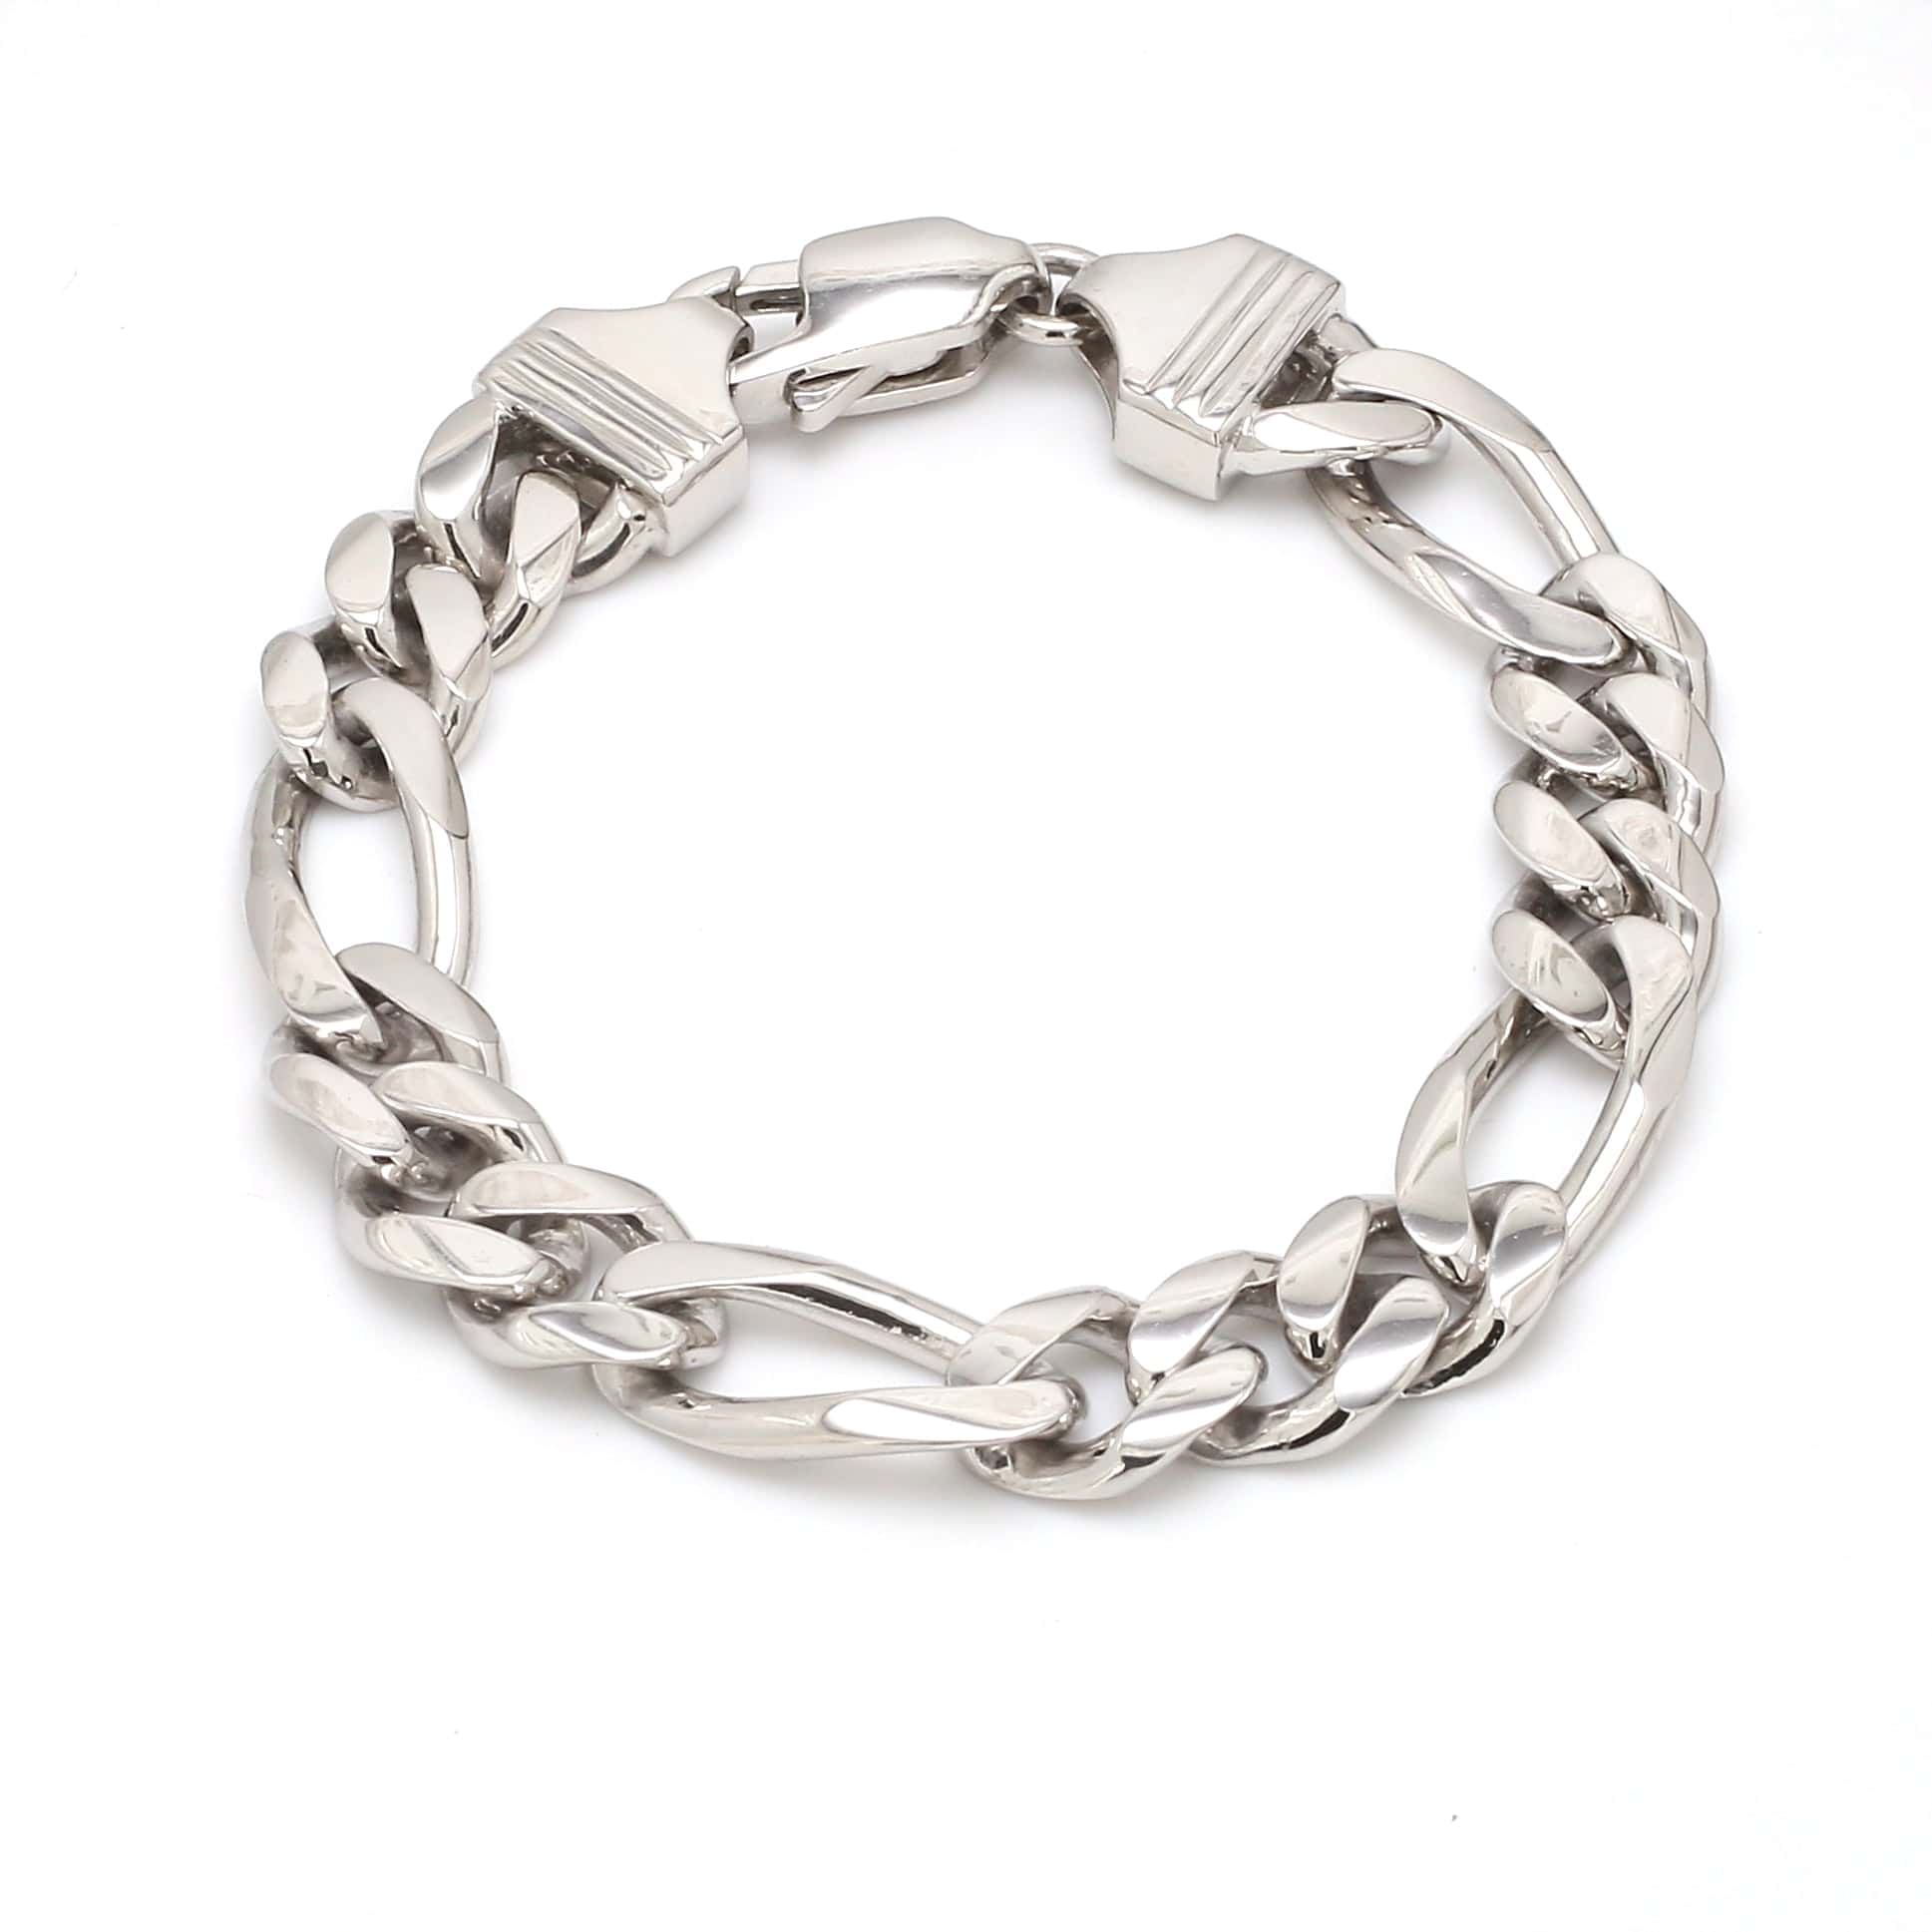 Stylish Chain Silver Bracelet For Men Boys - Fashion Frill